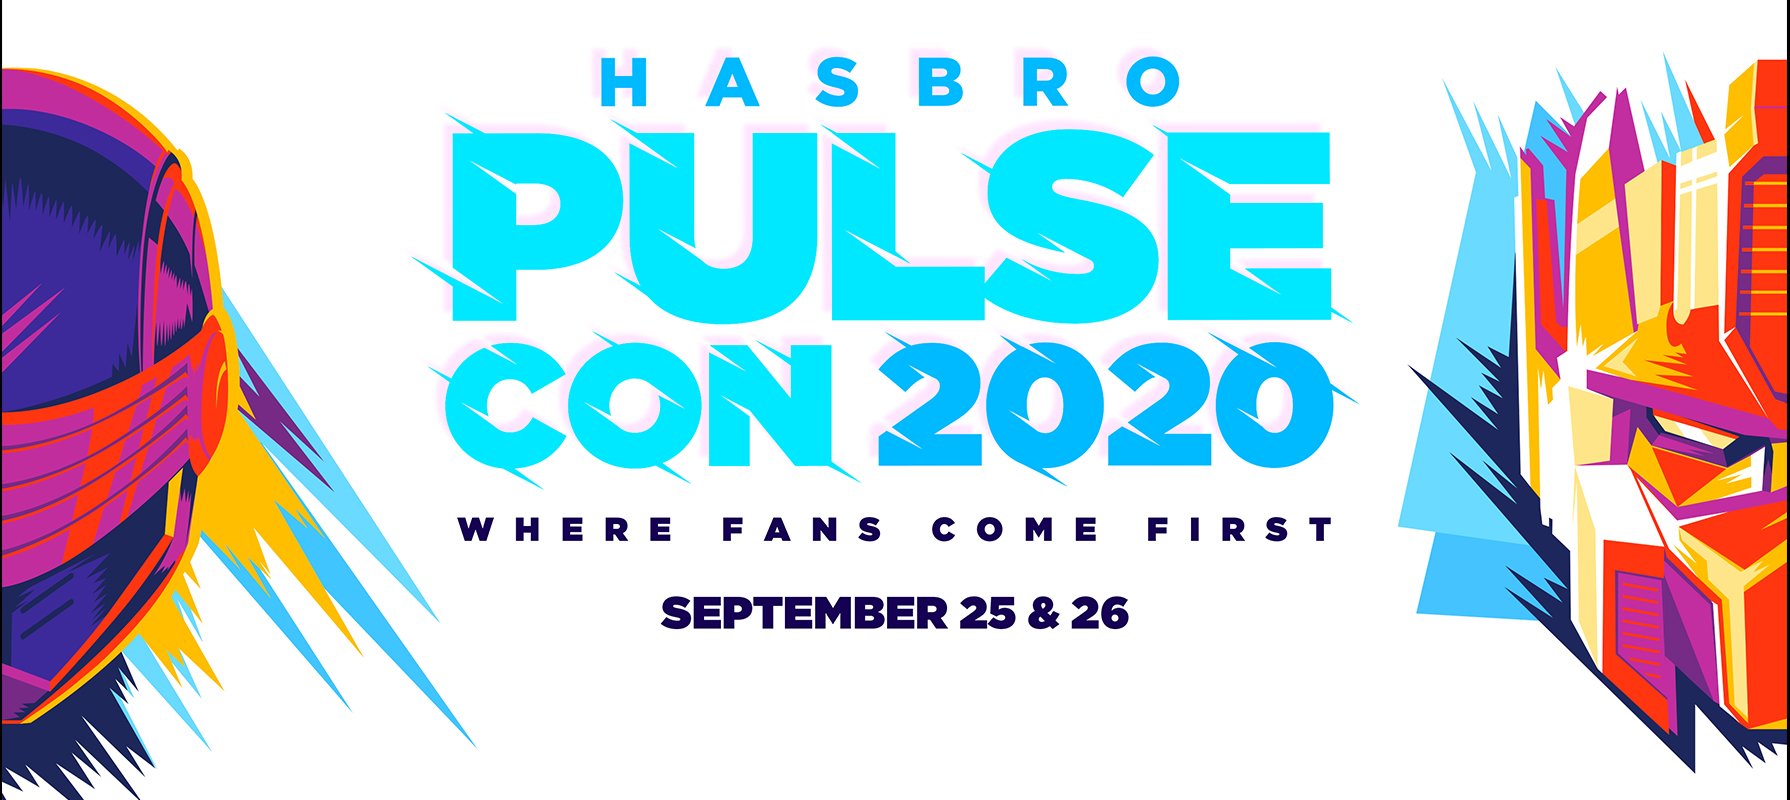 HASBRO PULSECON 2020 [News]: Virtual Toys"R"Us.